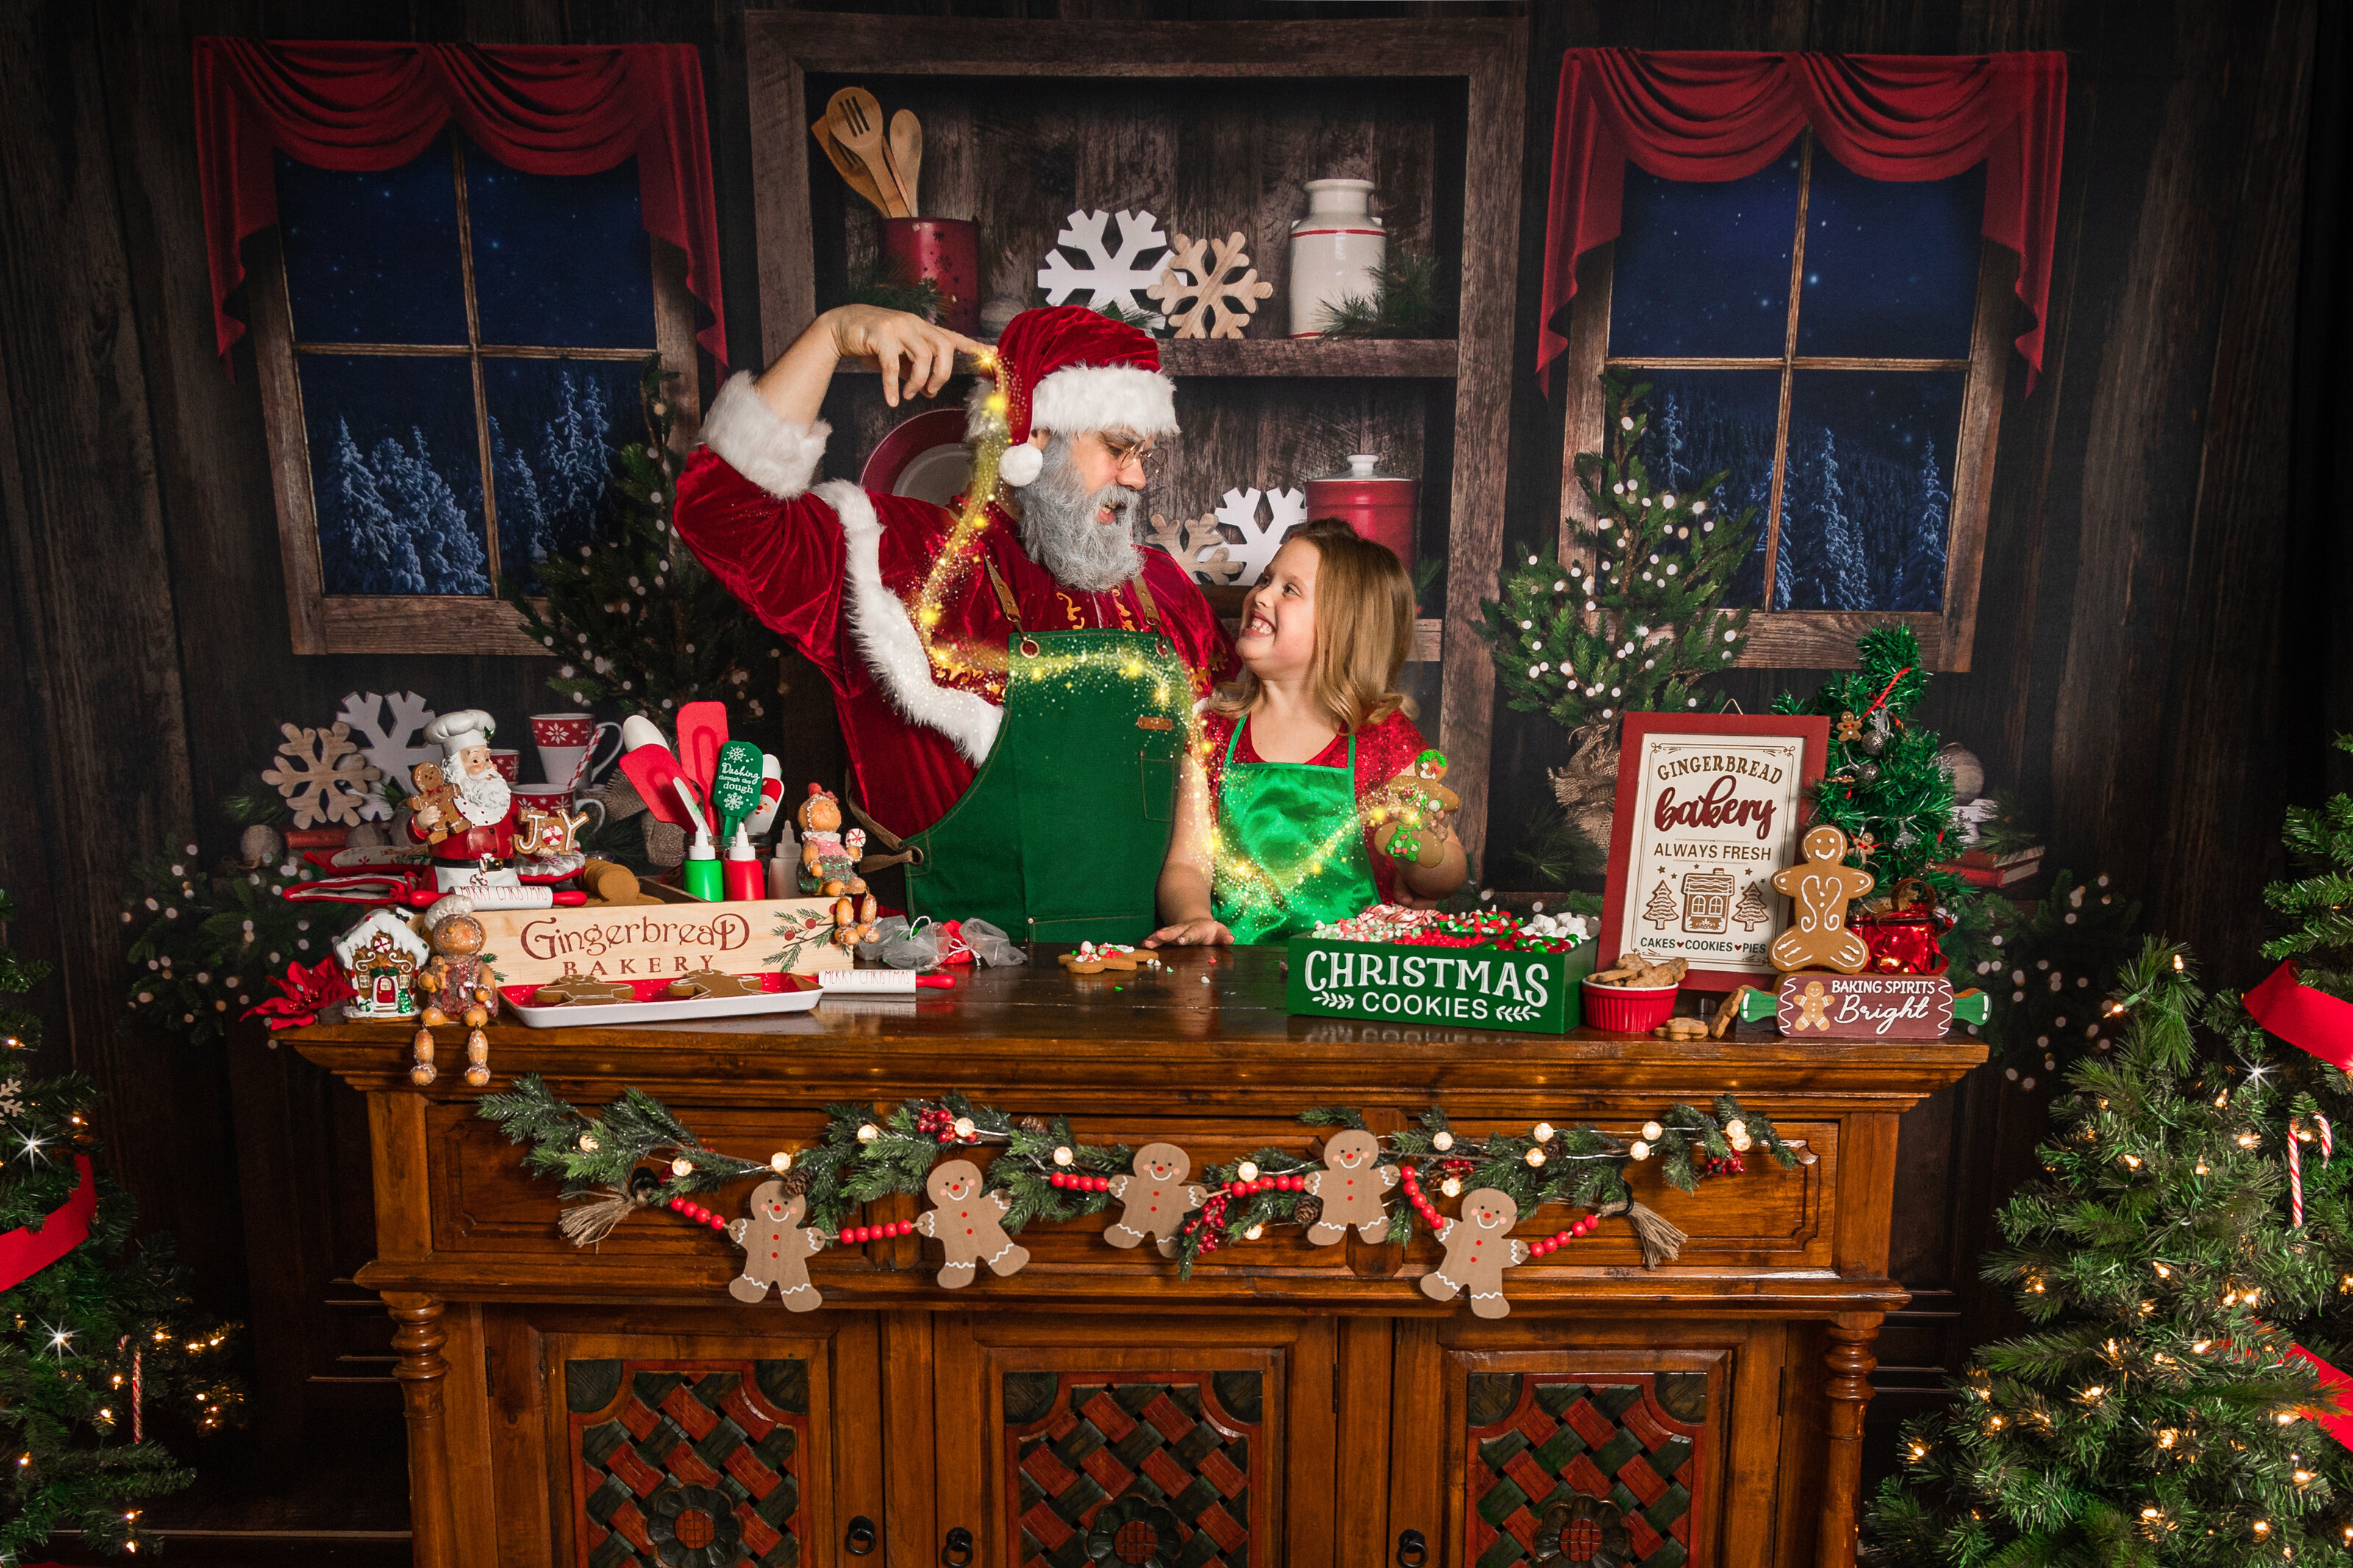 MASH - Holiday Cookie Decorating Santa Experience-26-magic b cropped